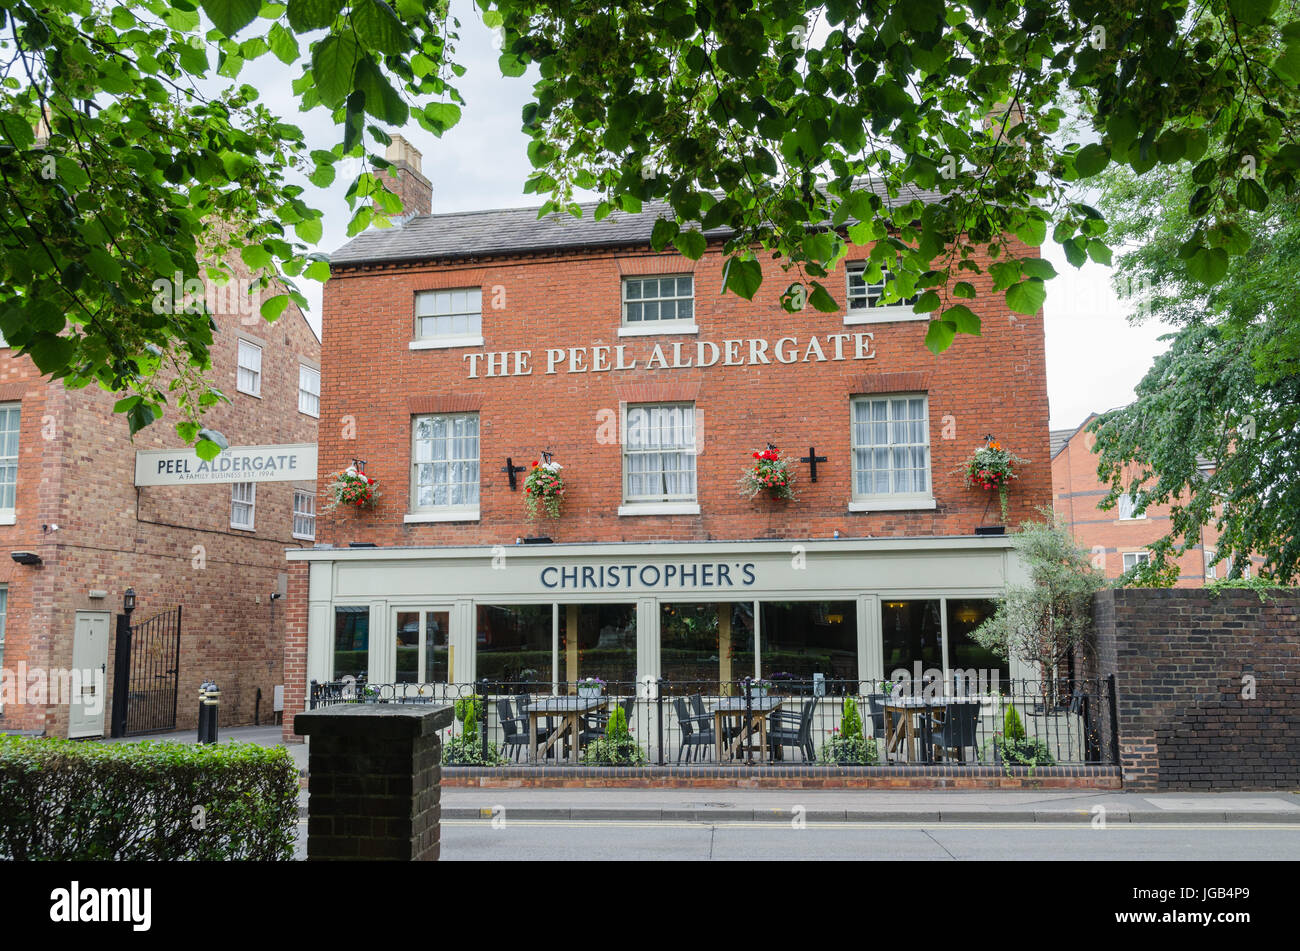 The Peel Aldergate hotel and Christopher's Bistro in Tamworth, Staffordshire Stock Photo